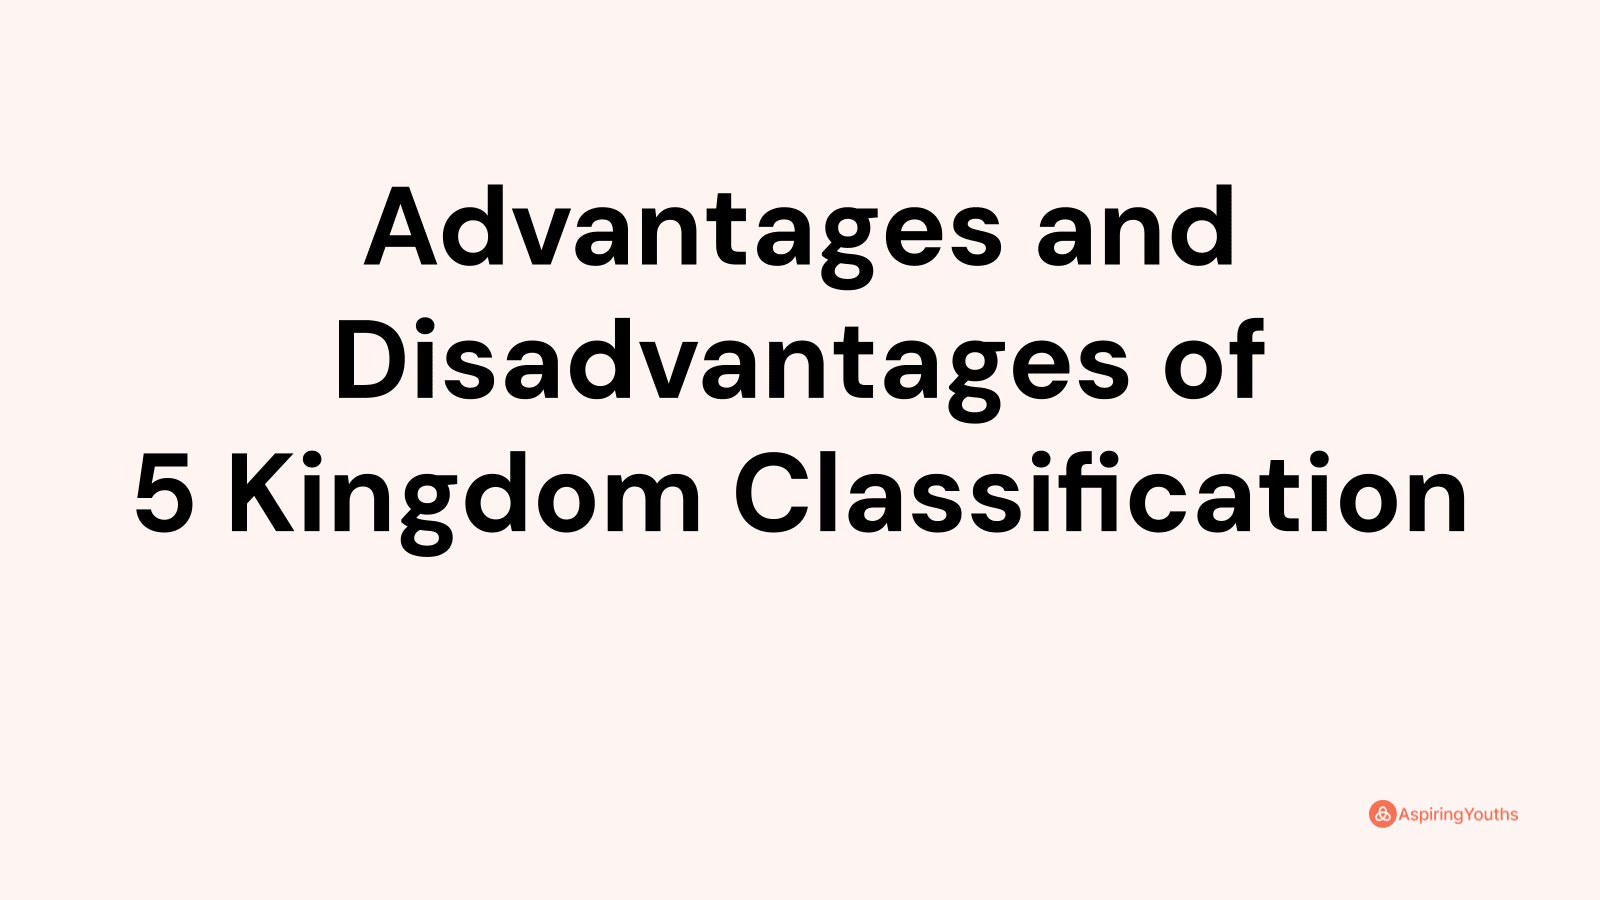 Advantages and disadvantages of 5 Kingdom Classification